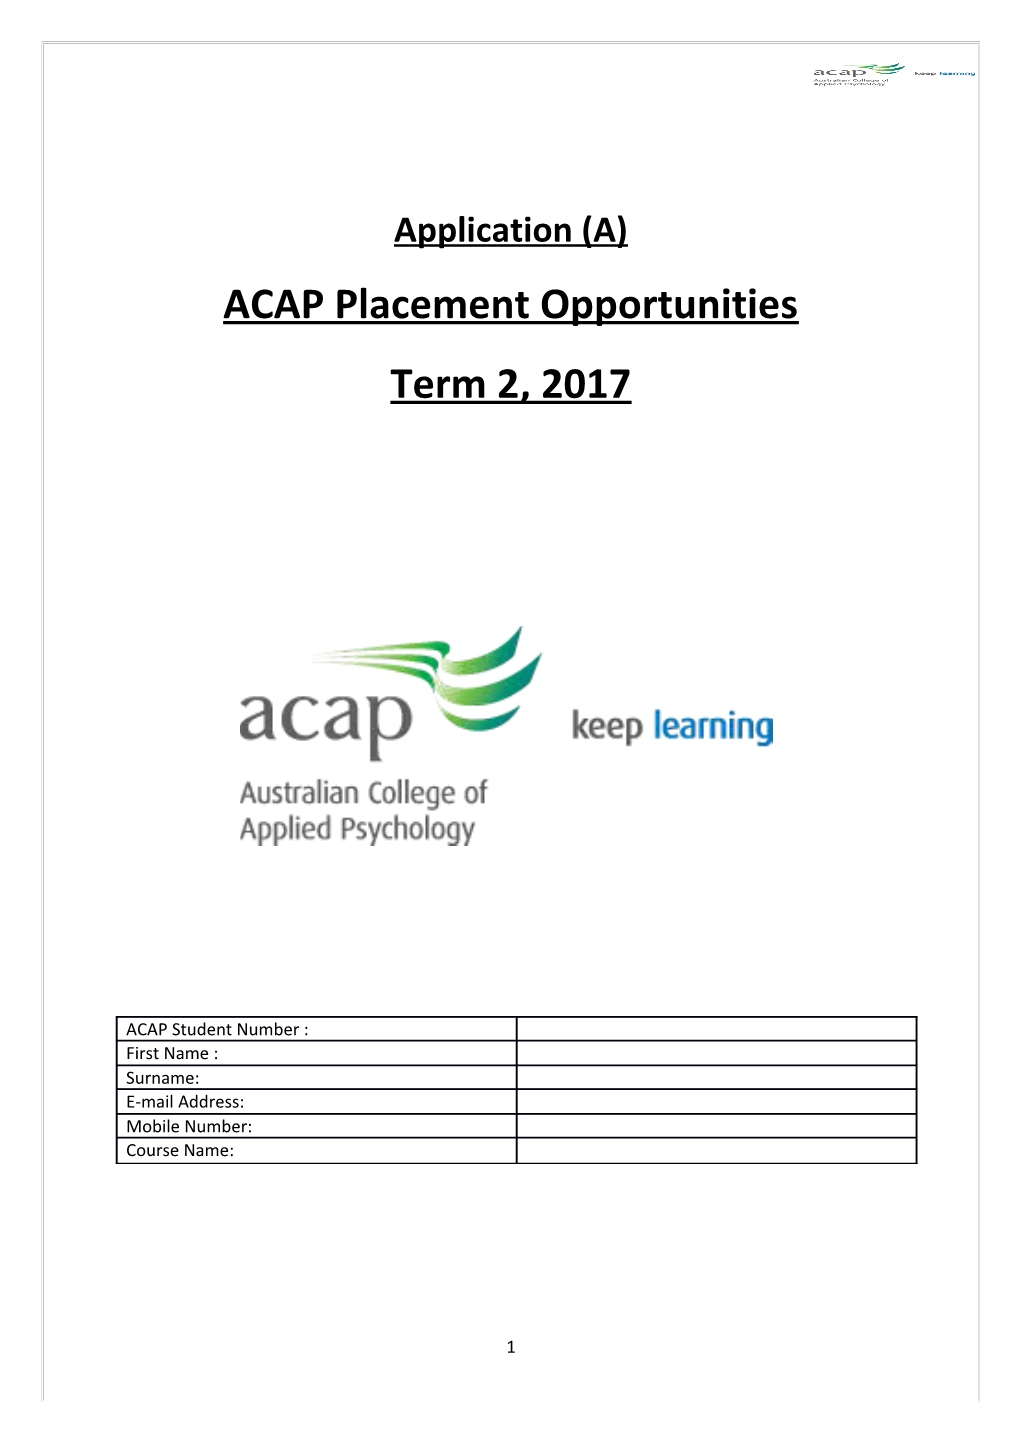 ACAP Placement Opportunities Term 2, 2017